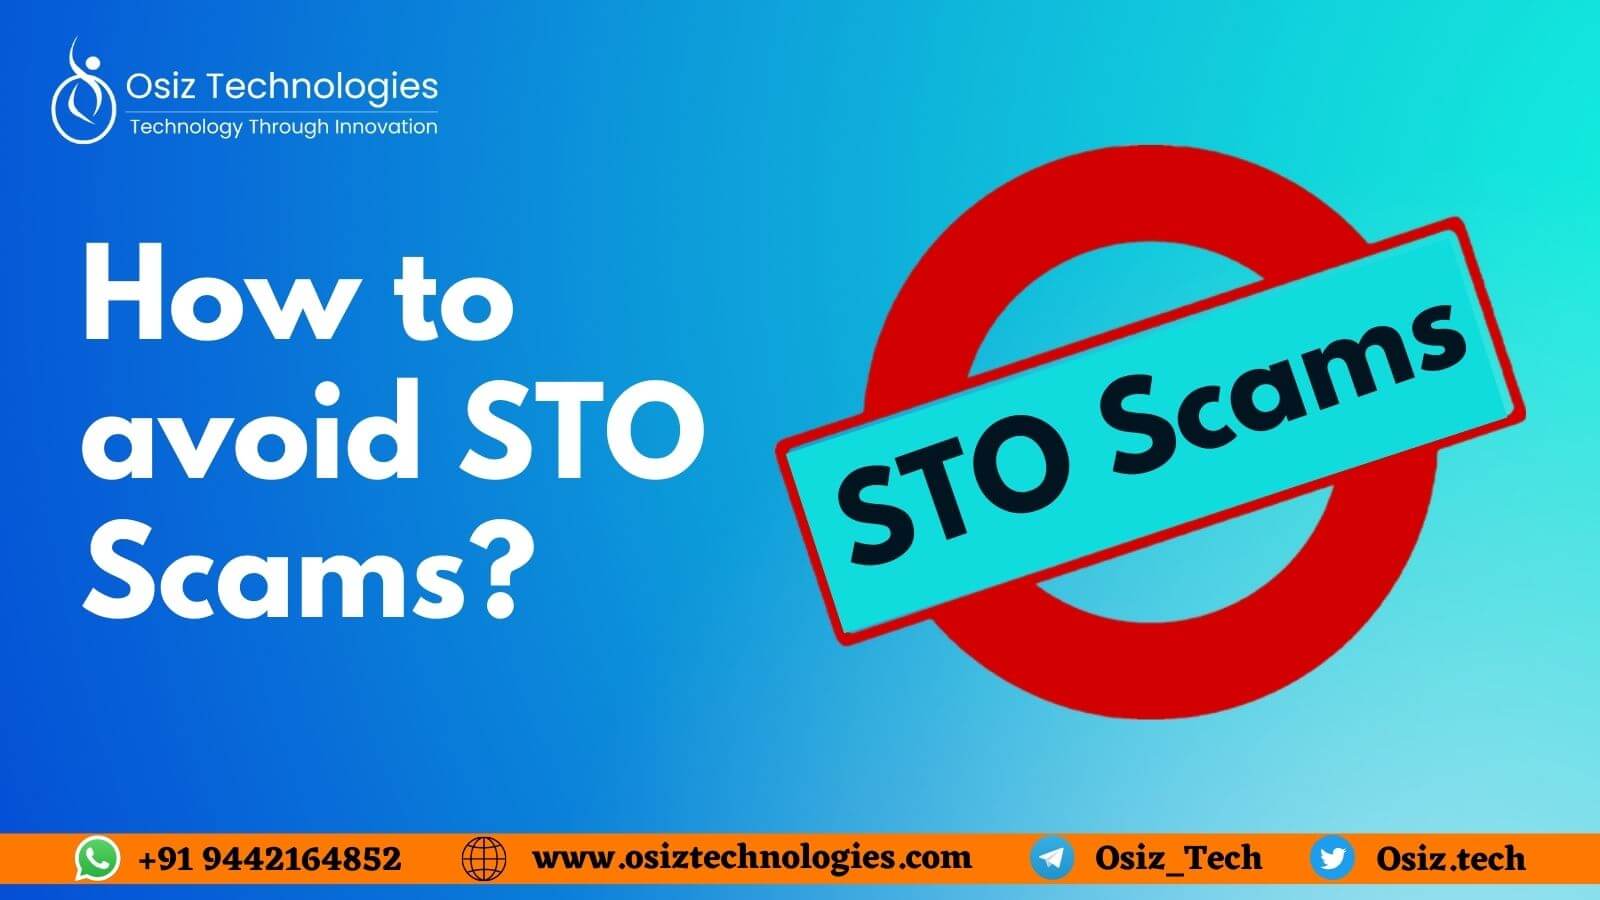 Avoid STO Scams